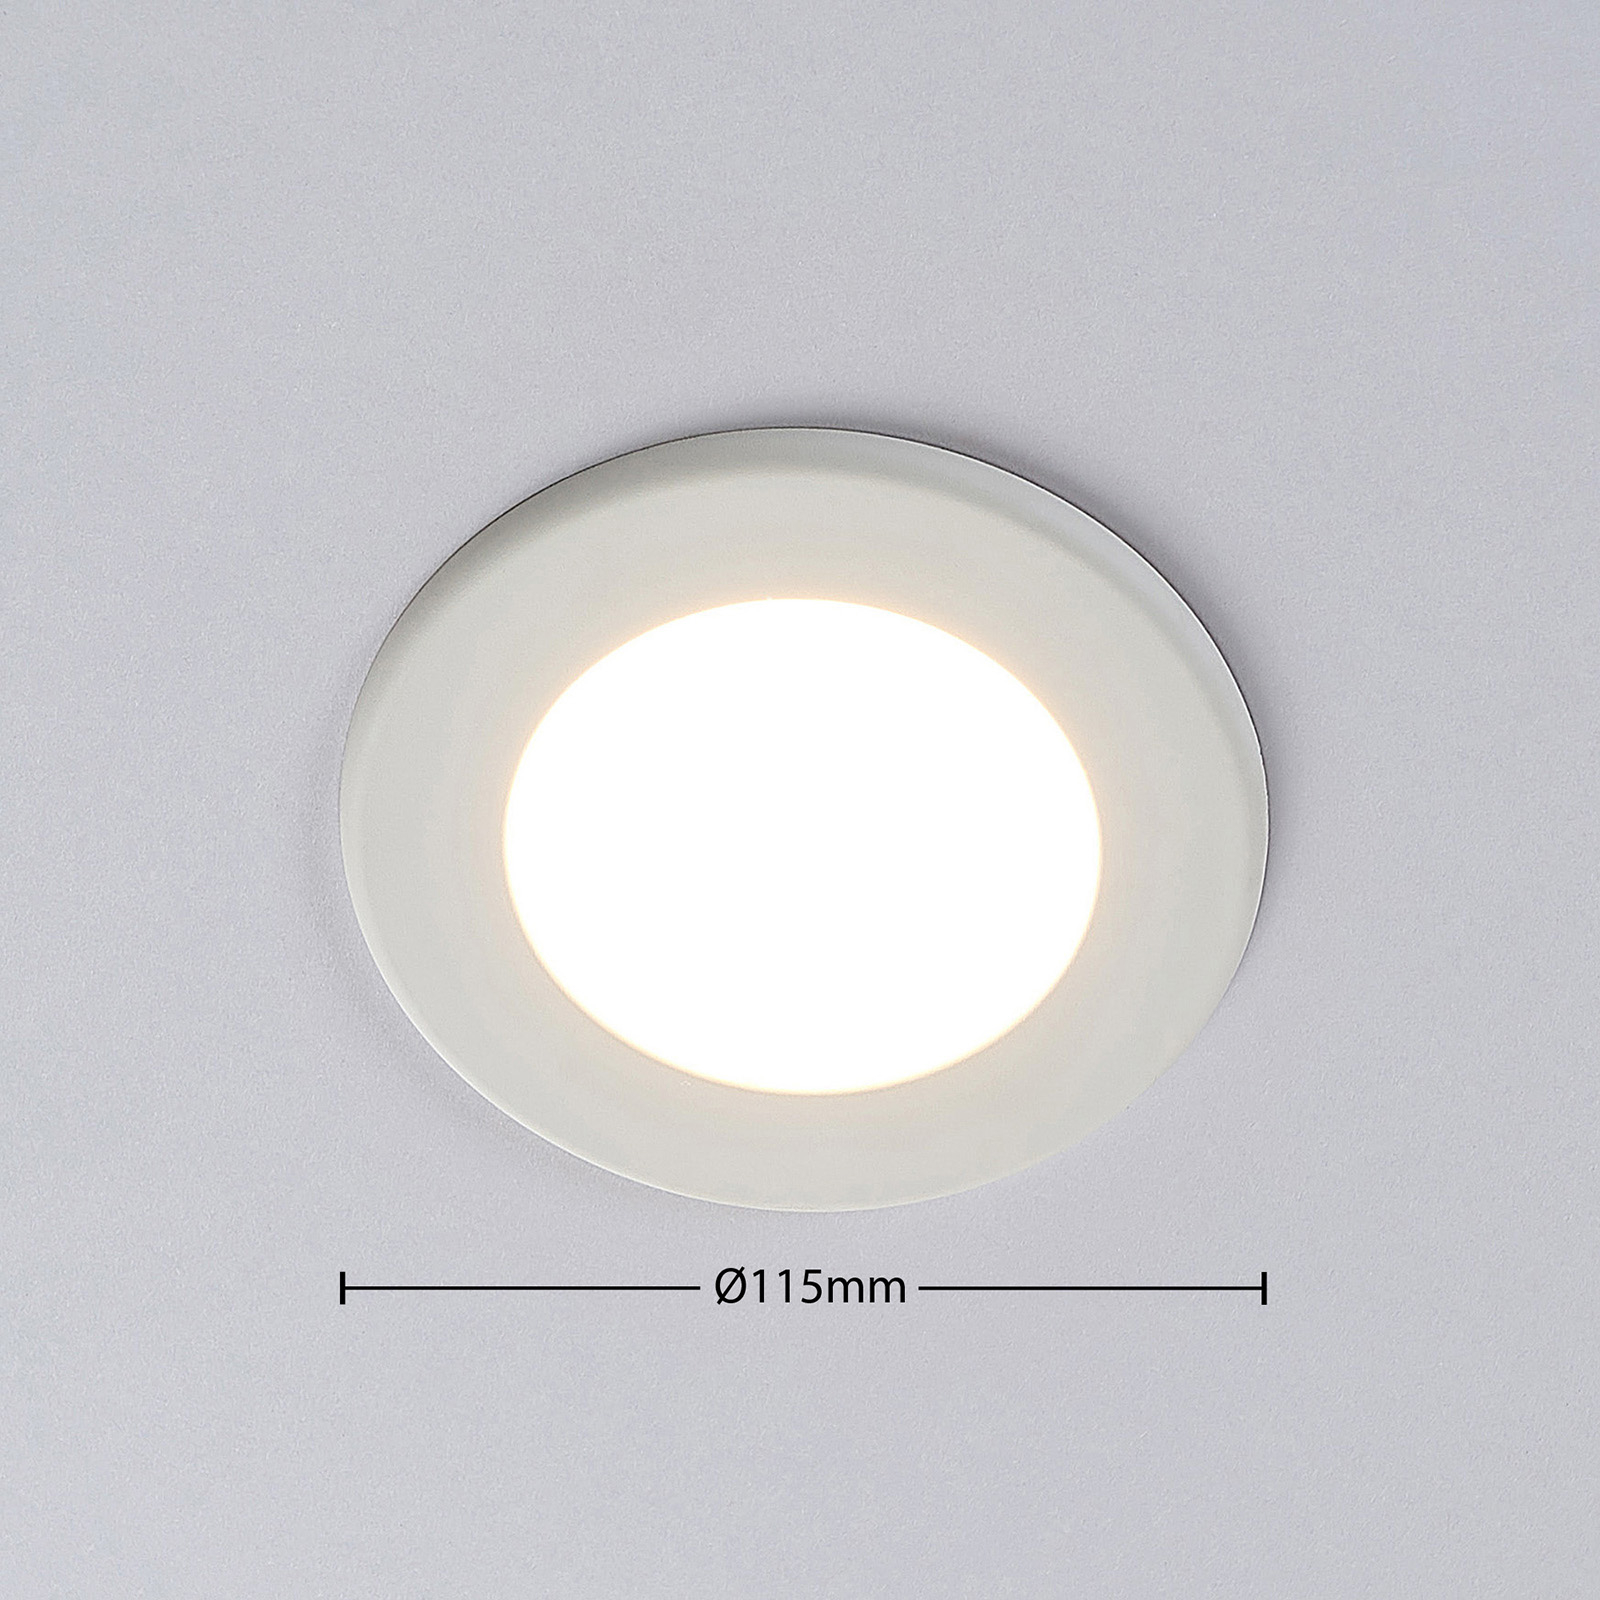 LED-Einbaustrahler Joki weiß 3000K rund 11,5cm